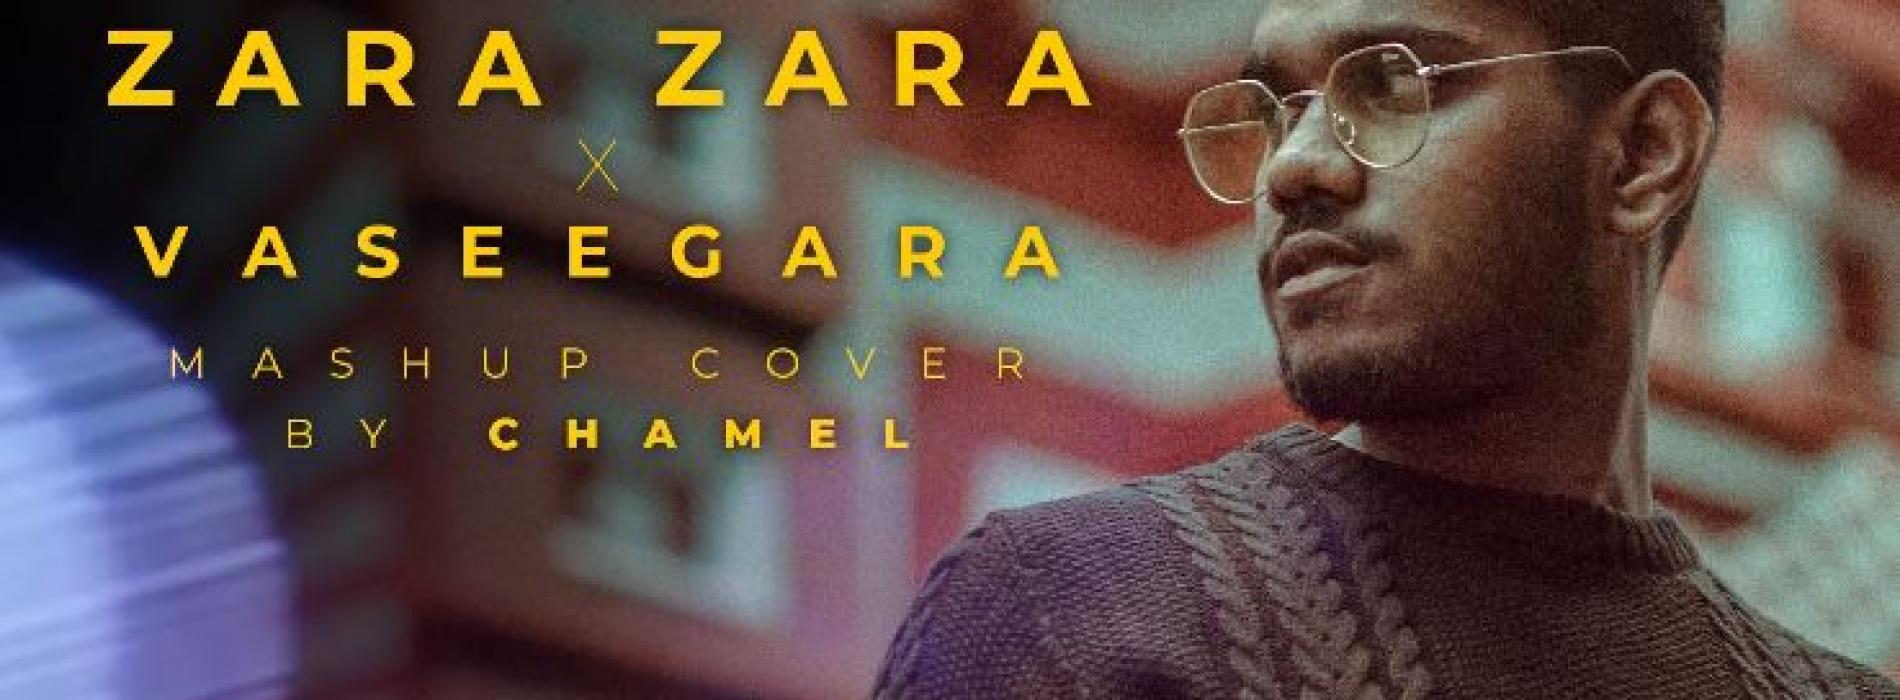 New Music : CHAMEL – Zara Zara X Vaseegara (Mashup Cover)